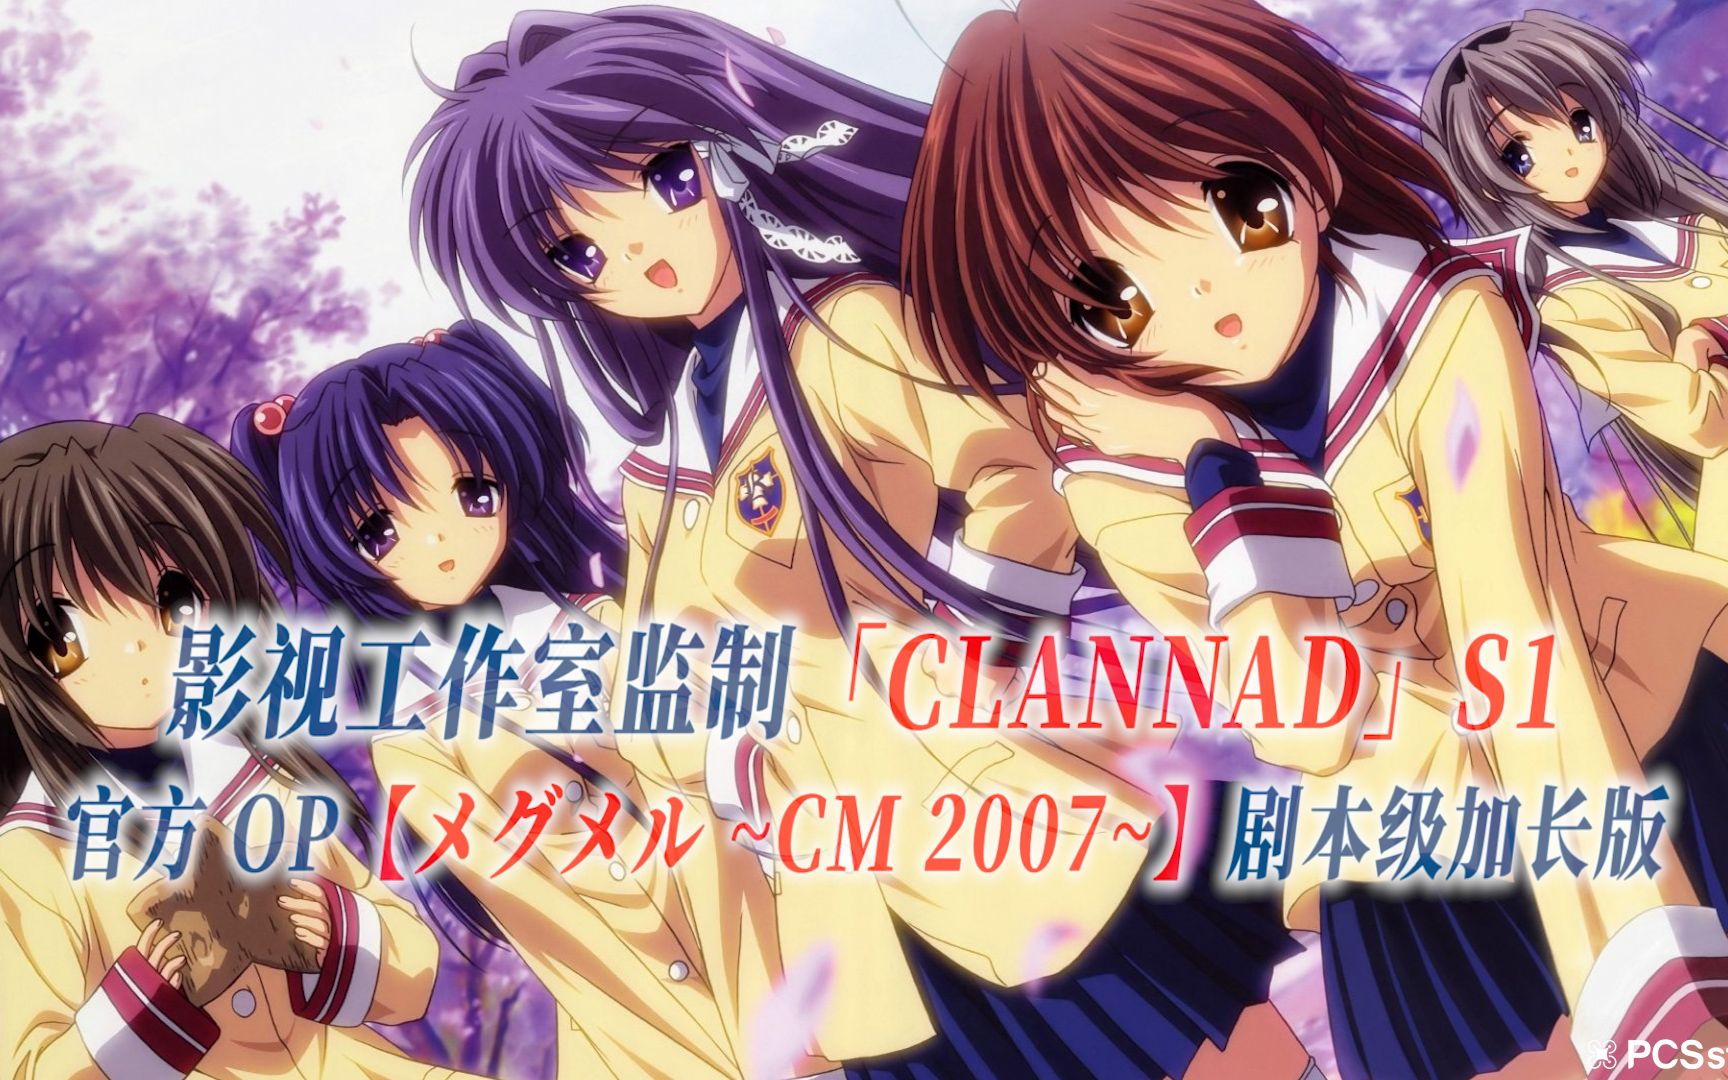 【PCS Anime/官方OP延长/季①】「CLANNAD」S1【メグメル ~cuckool mix 2007~】官方OP曲 剧本级加长版 PCS Studio